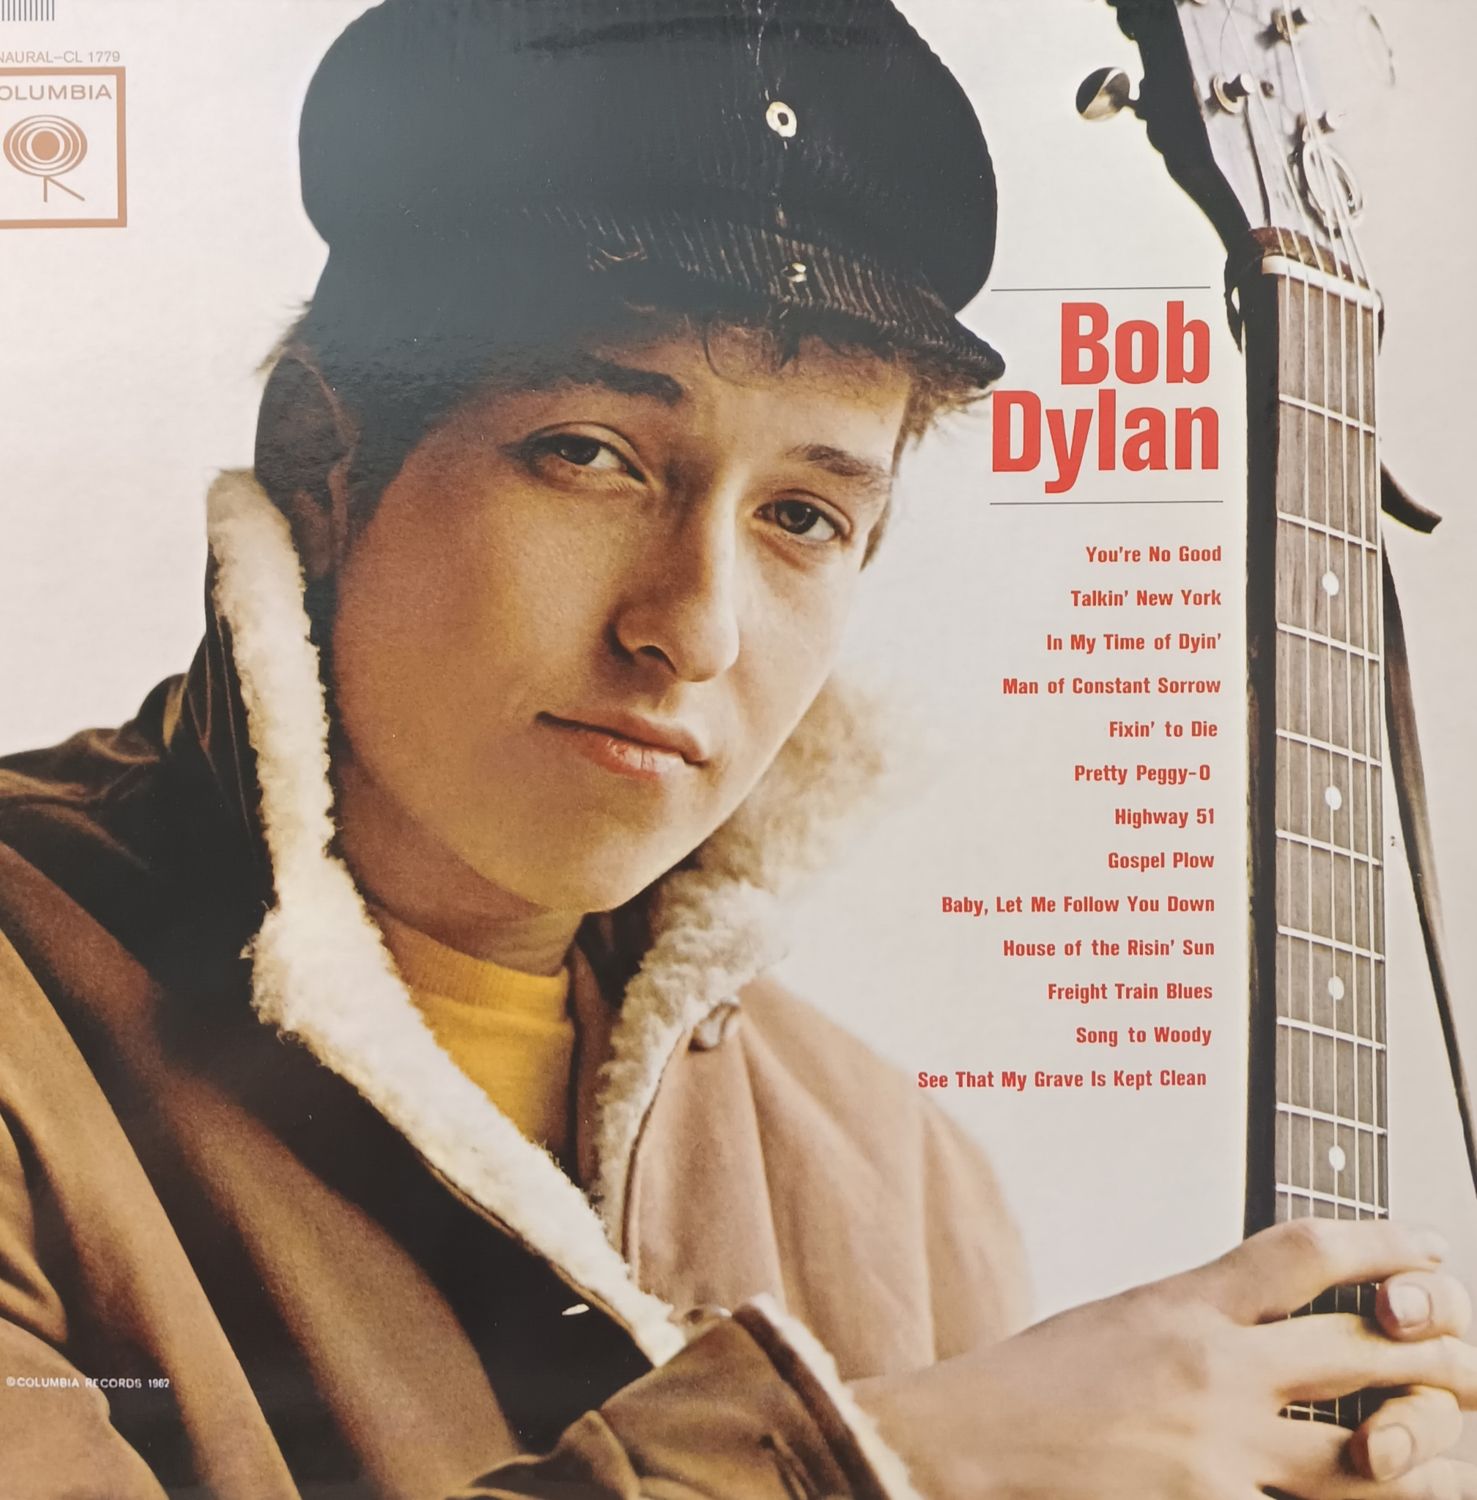 BOB DYLAN - Bob Dylan (2010)